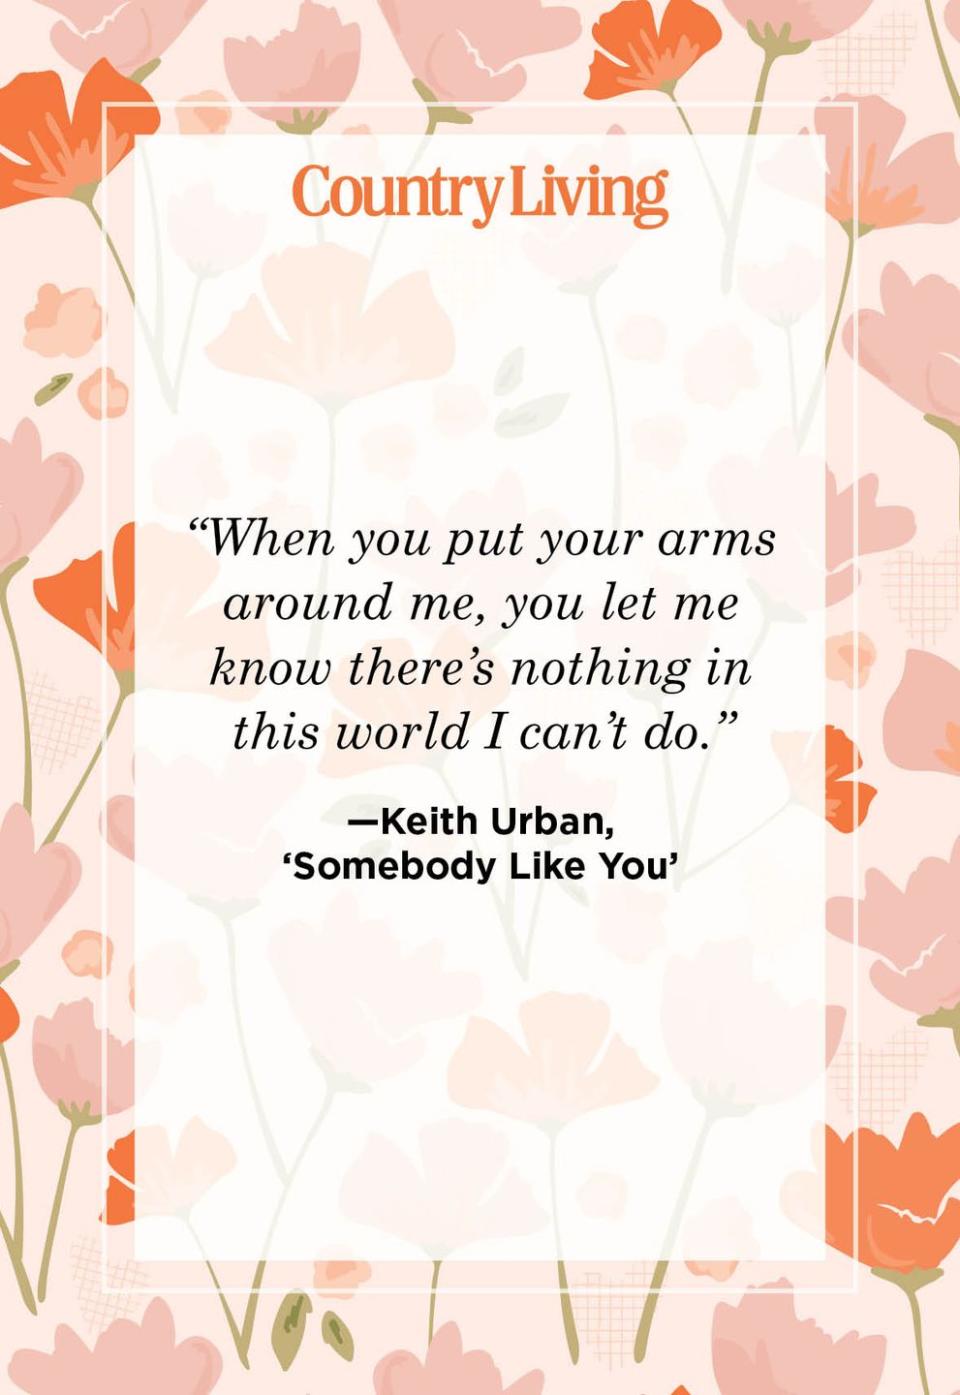 1) Keith Urban, 'Somebody Like You'